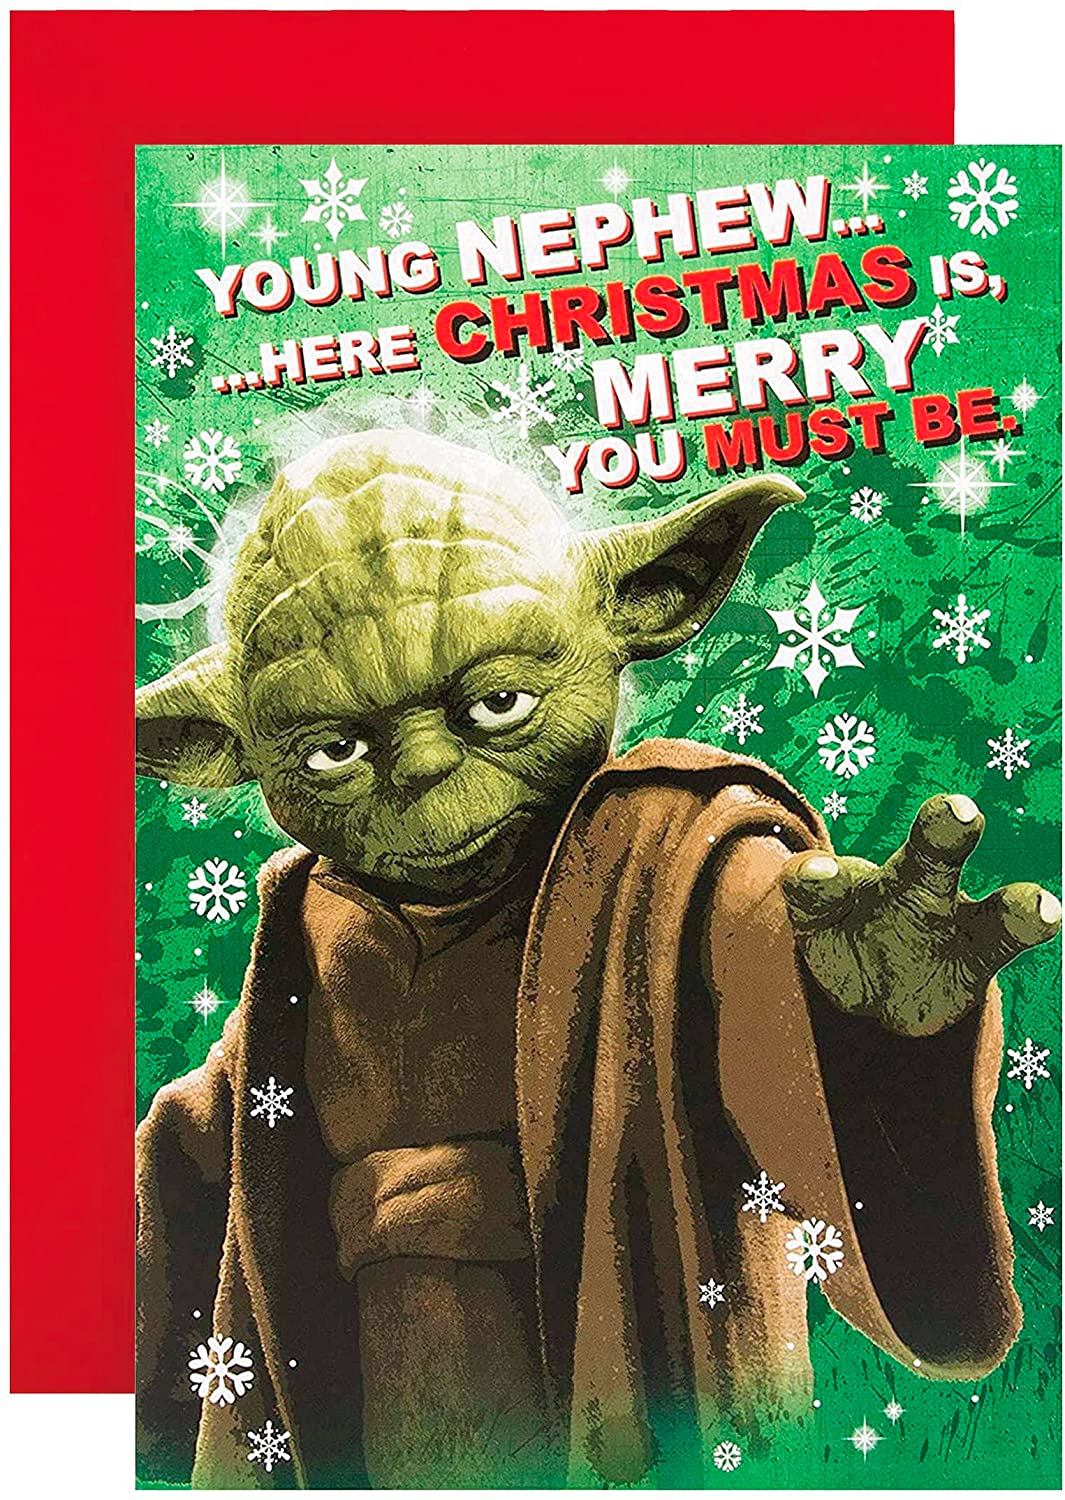 Hallmark Nephew Star Wars Christmas Card RRP 2.50 CLEARANCE XL 1.49